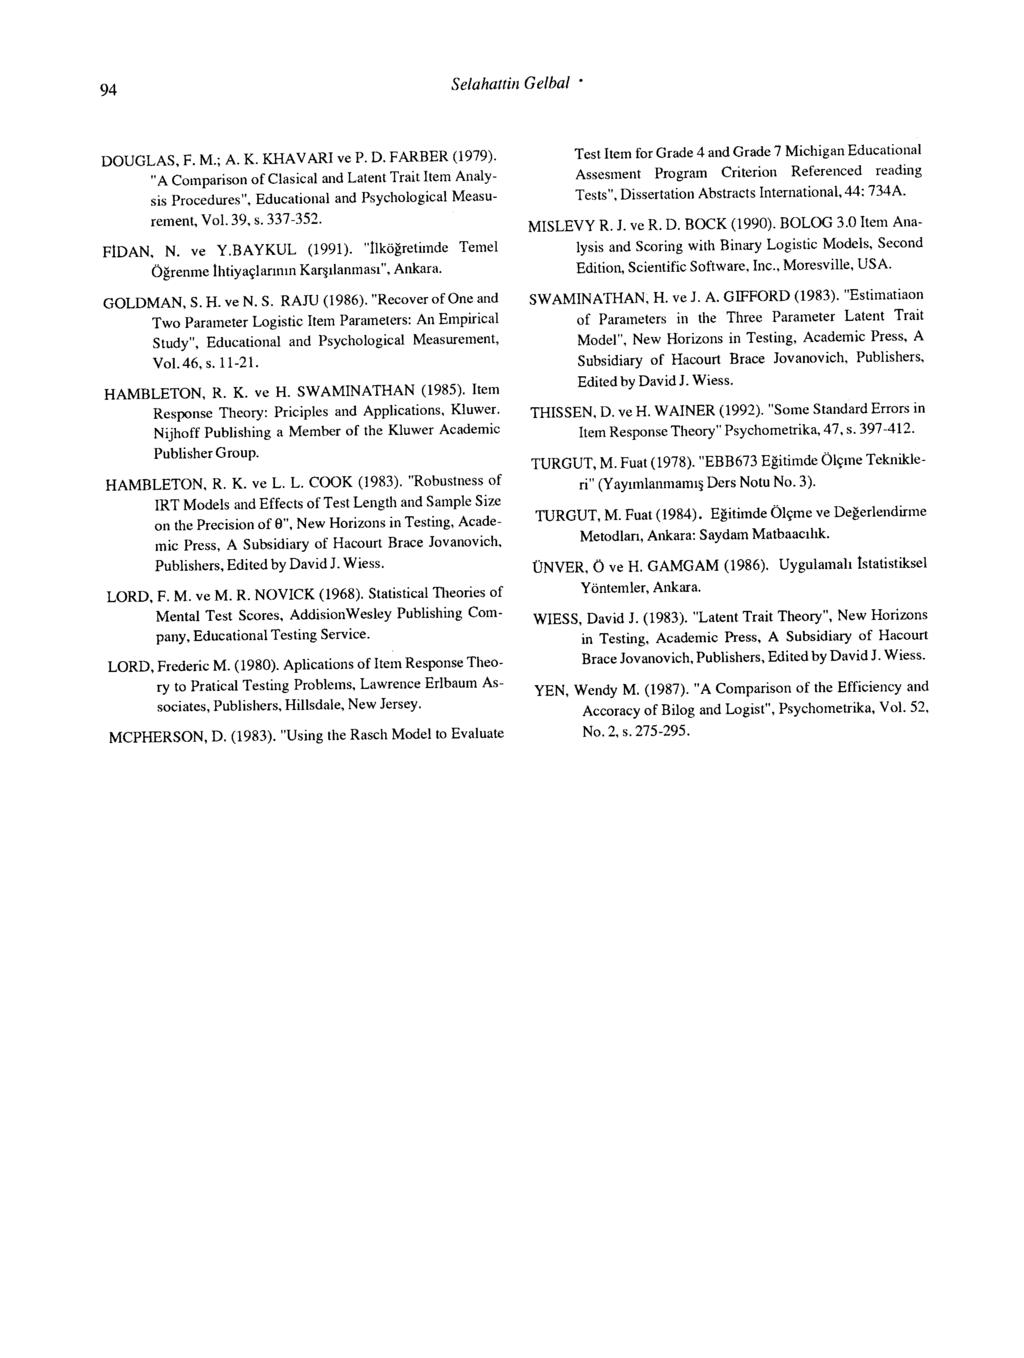 94 Selahattin Gelbal. DOUGLAS, F. M.; A. K. KHA V ARI ve P. D. FARBER (1979). "A Comparison of Clasica1 and Latent Trait Item Ana1ysis Procedures", Educational and Psychologica1 Measurement, Vol.